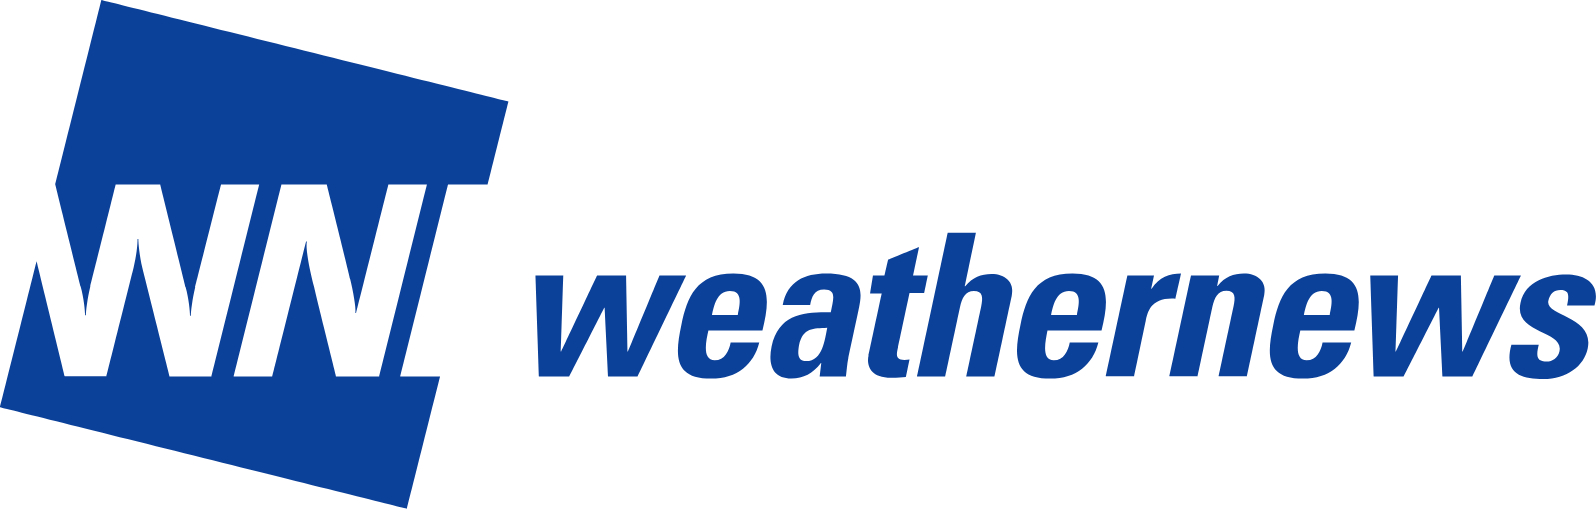 Weathernews Inc. logo large (transparent PNG)